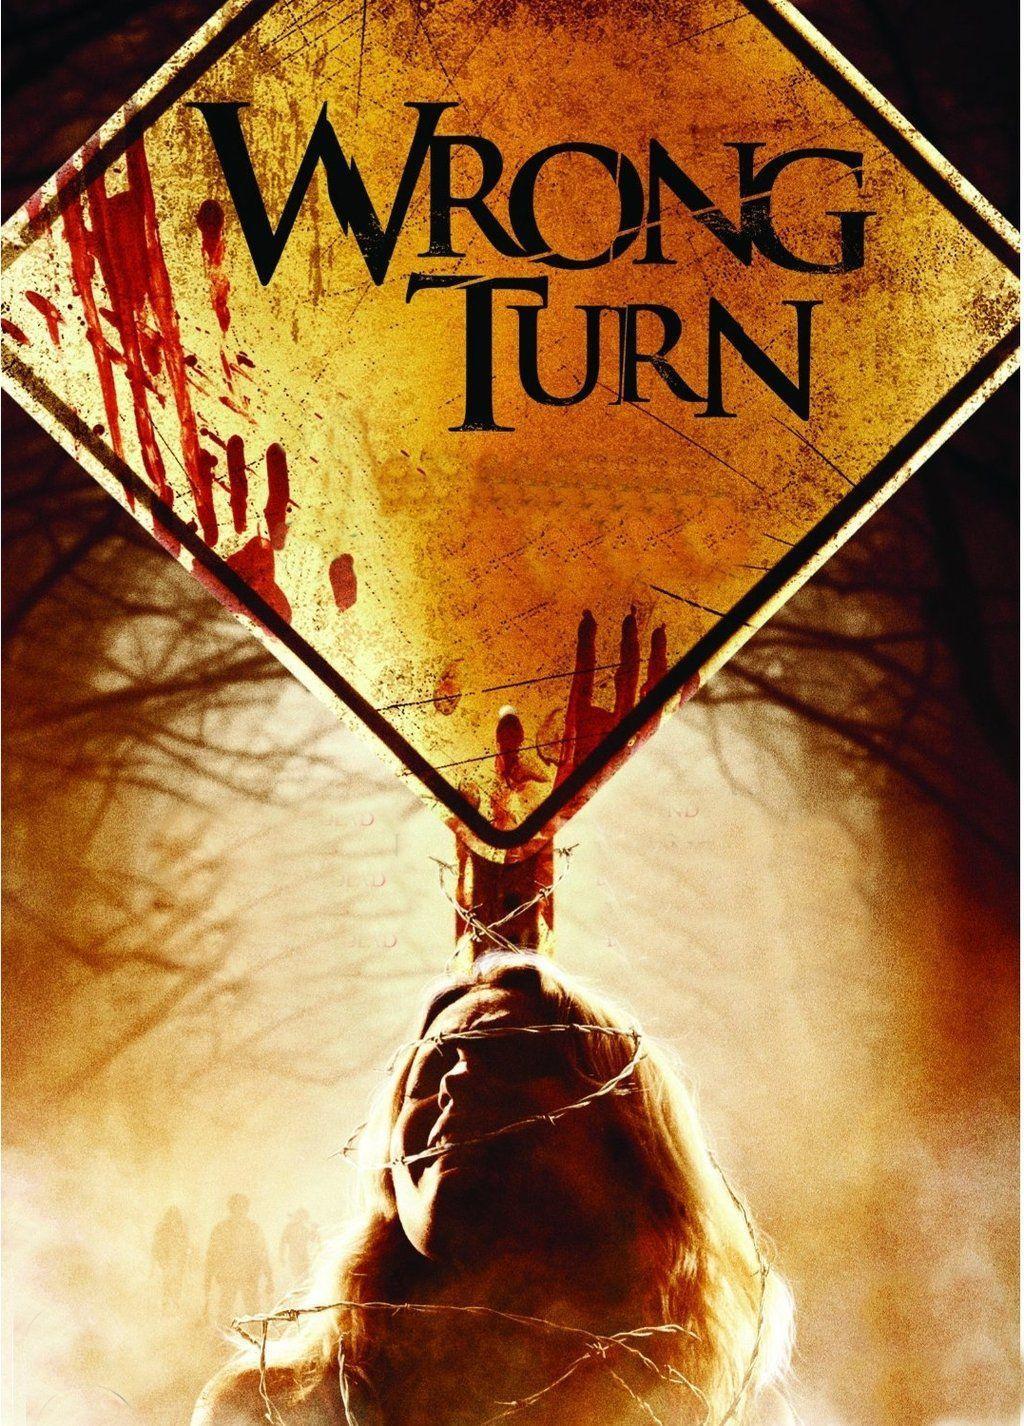 Wrong Turn Poster Wallpaper